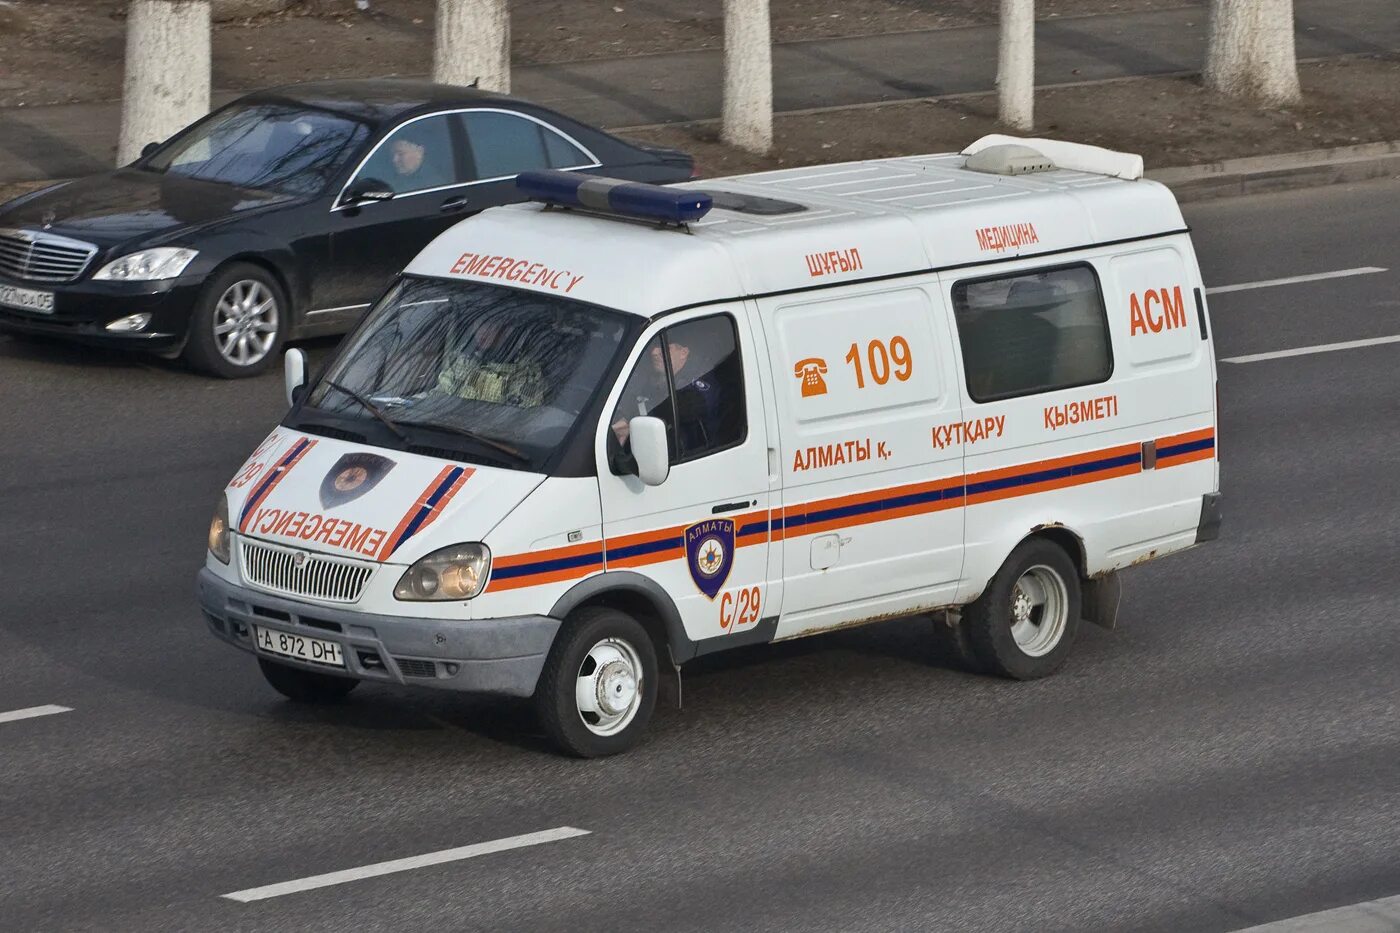 АСМ-41-02 на базе ГАЗ-27057. Аварийно-спасательная машина АСМ-41-02-27057. АСМ-41-02 базовое шасси ГАЗ-27057. Аварийно-спасательная машина АСМ-41-02 на базе автомобиля ГАЗ-27057.